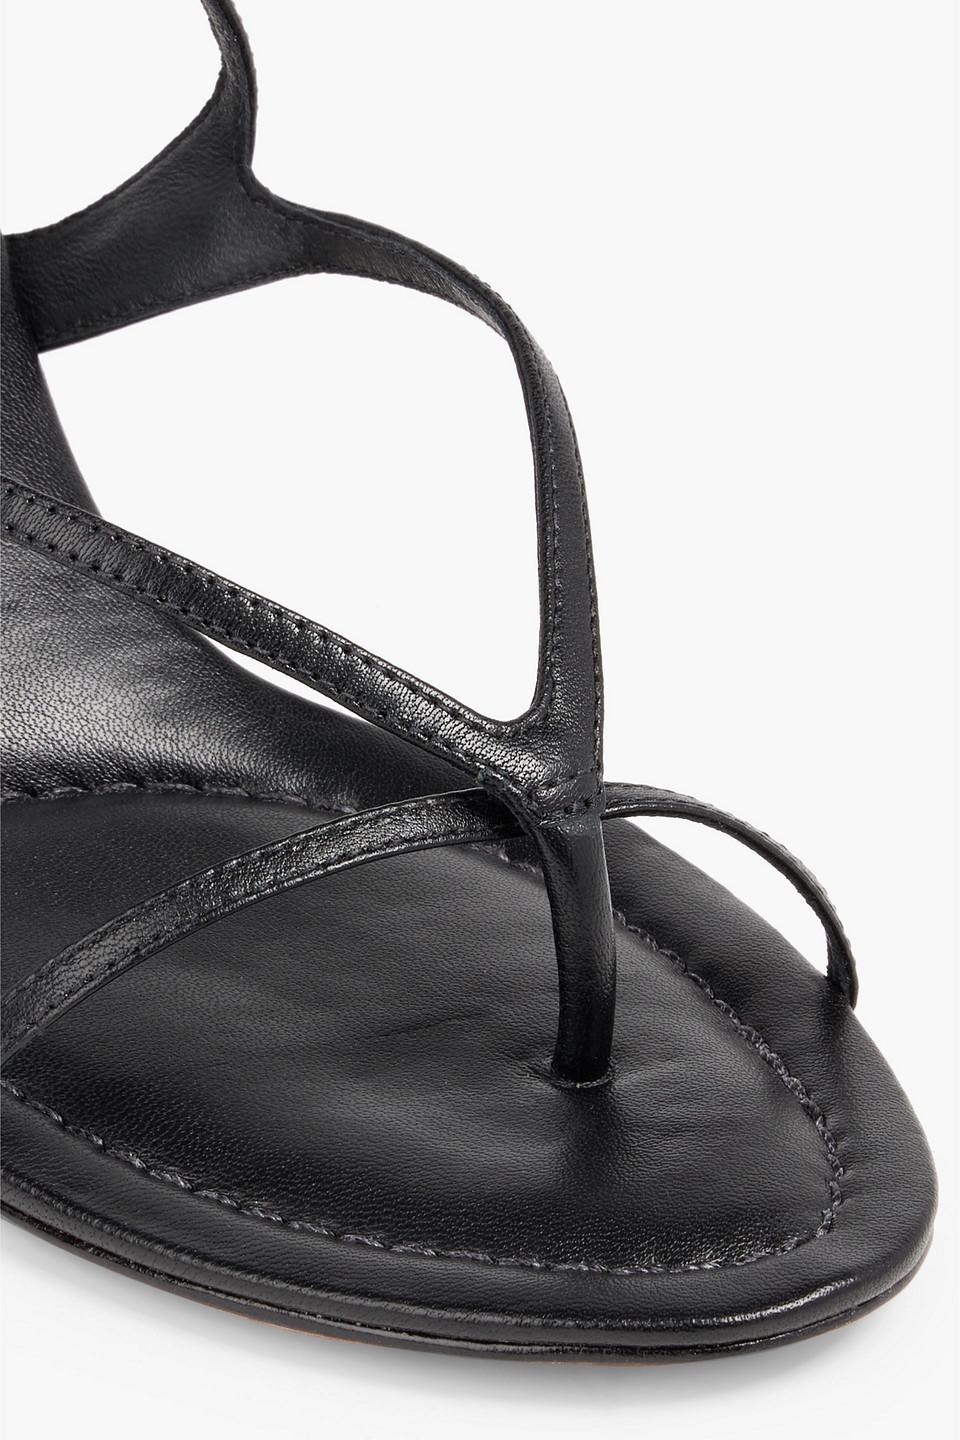 Alexandre Birman Alicia 50 Leather Sandals in Black | Lyst